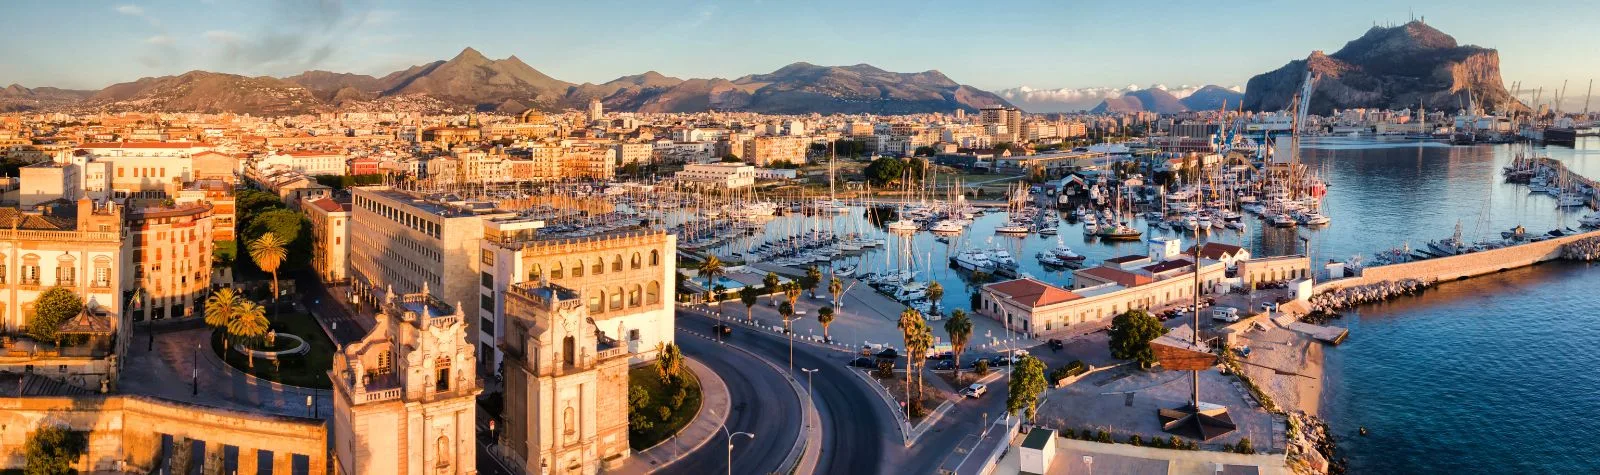 Palermo Luxury Hotels: Where Sicilian Elegance Meets Mediterranean Splendor